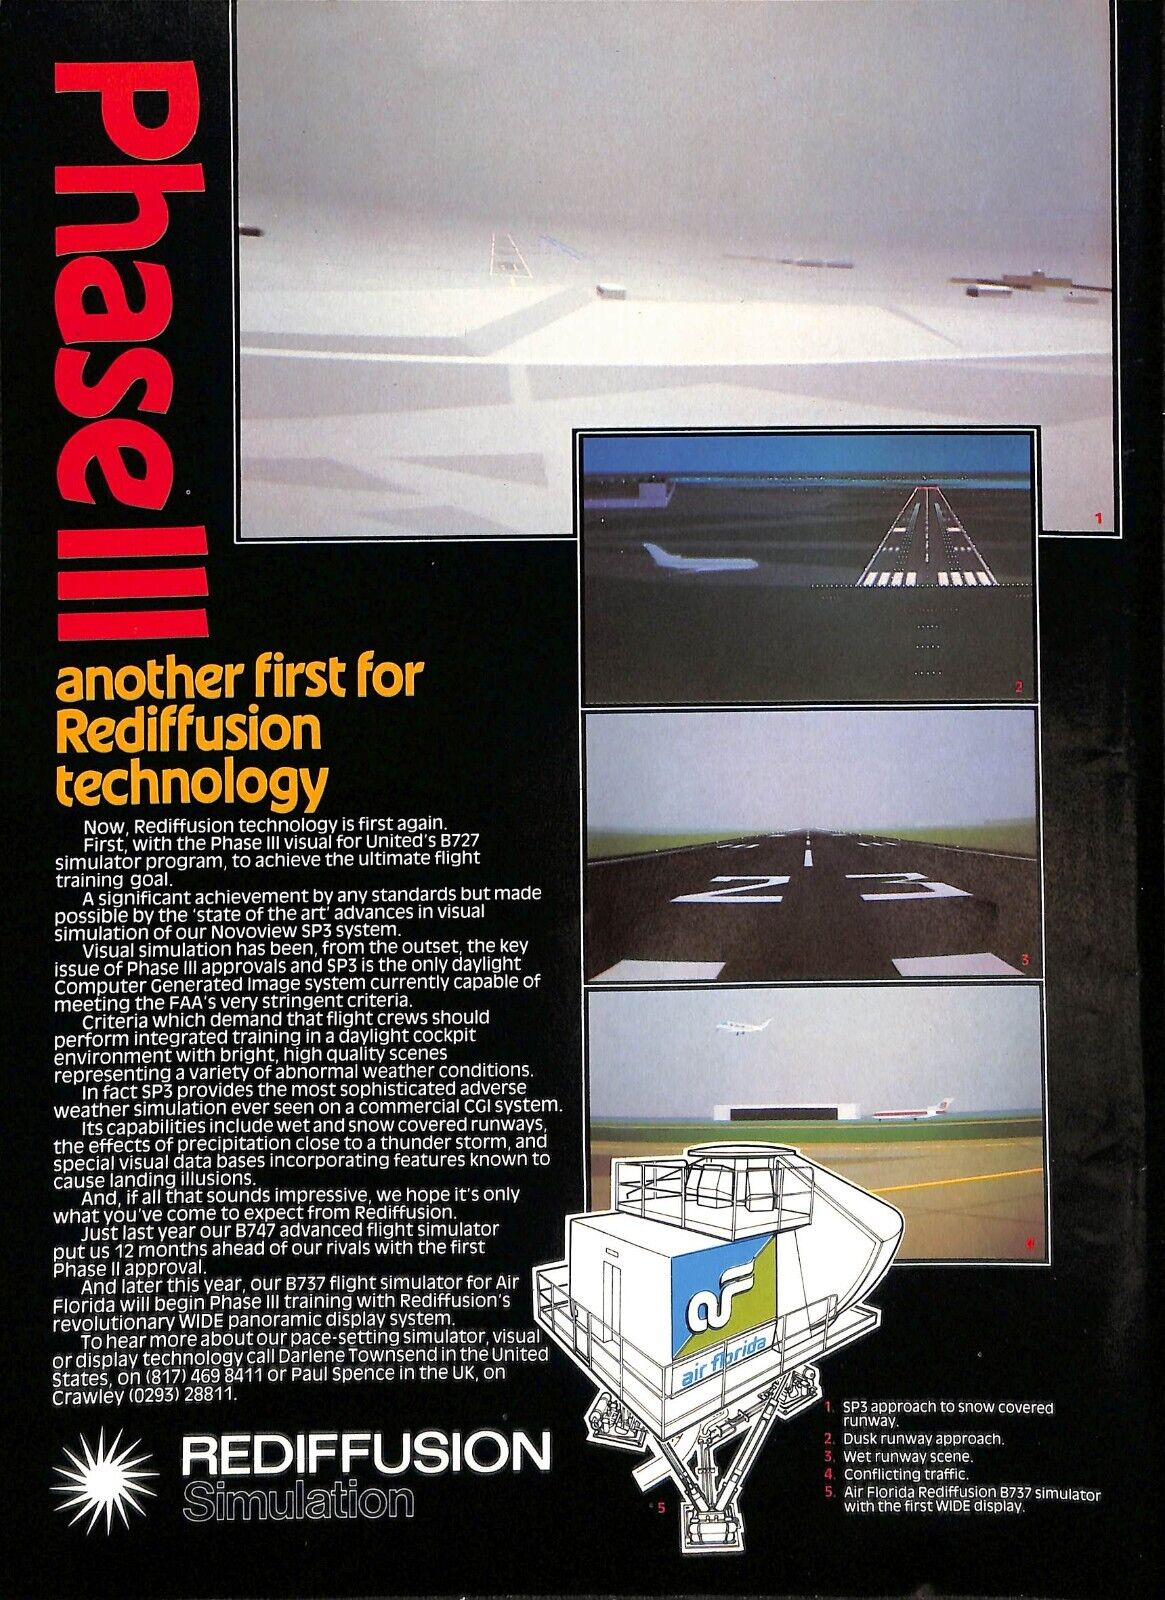 1982 Phase III Airplane Simulator Rediffusion Simulation Print Ad A7